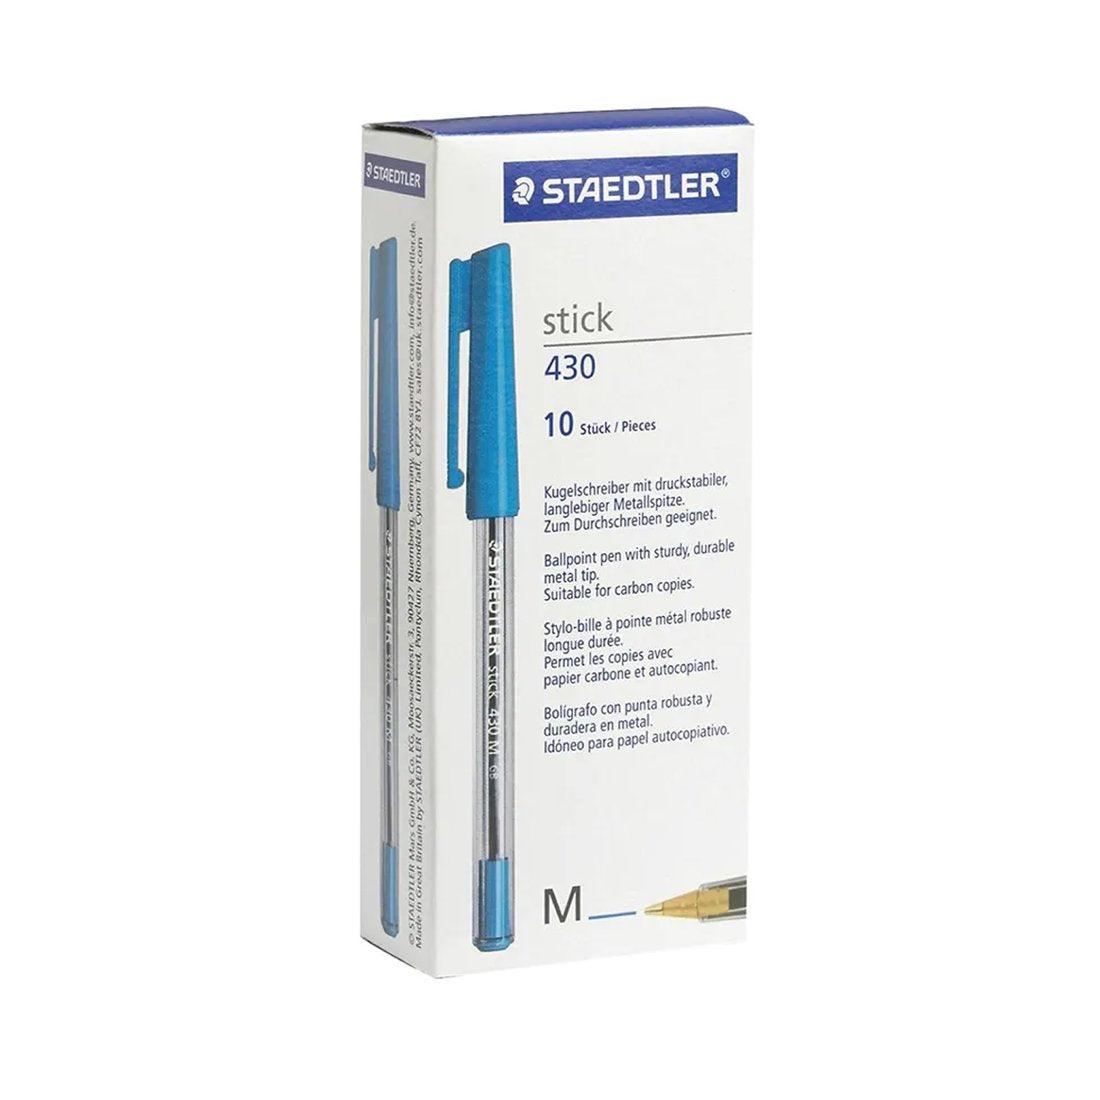 Staedtler: Stick Ballpoint Pens Medium 430 Blue Ink - Pack of 10 - Vending Superstore